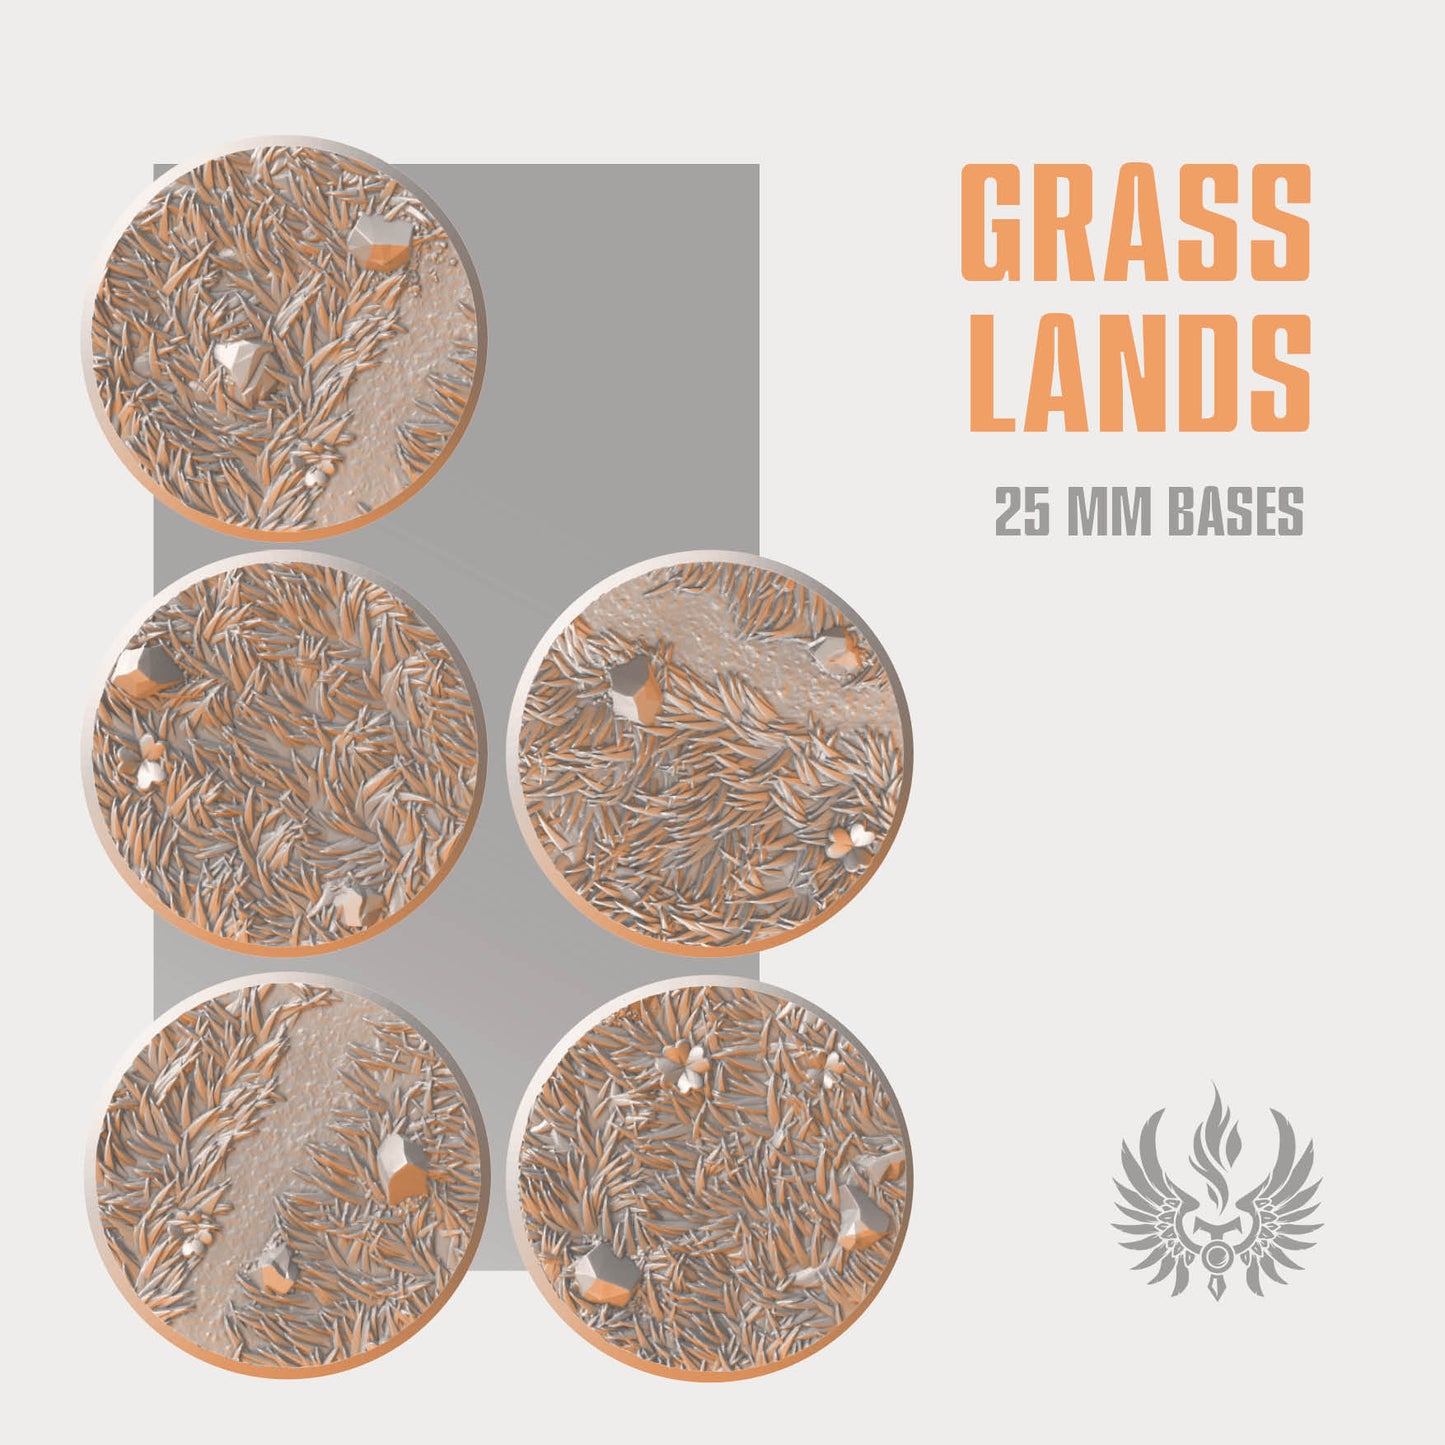 Grass Lands bases 25 mm